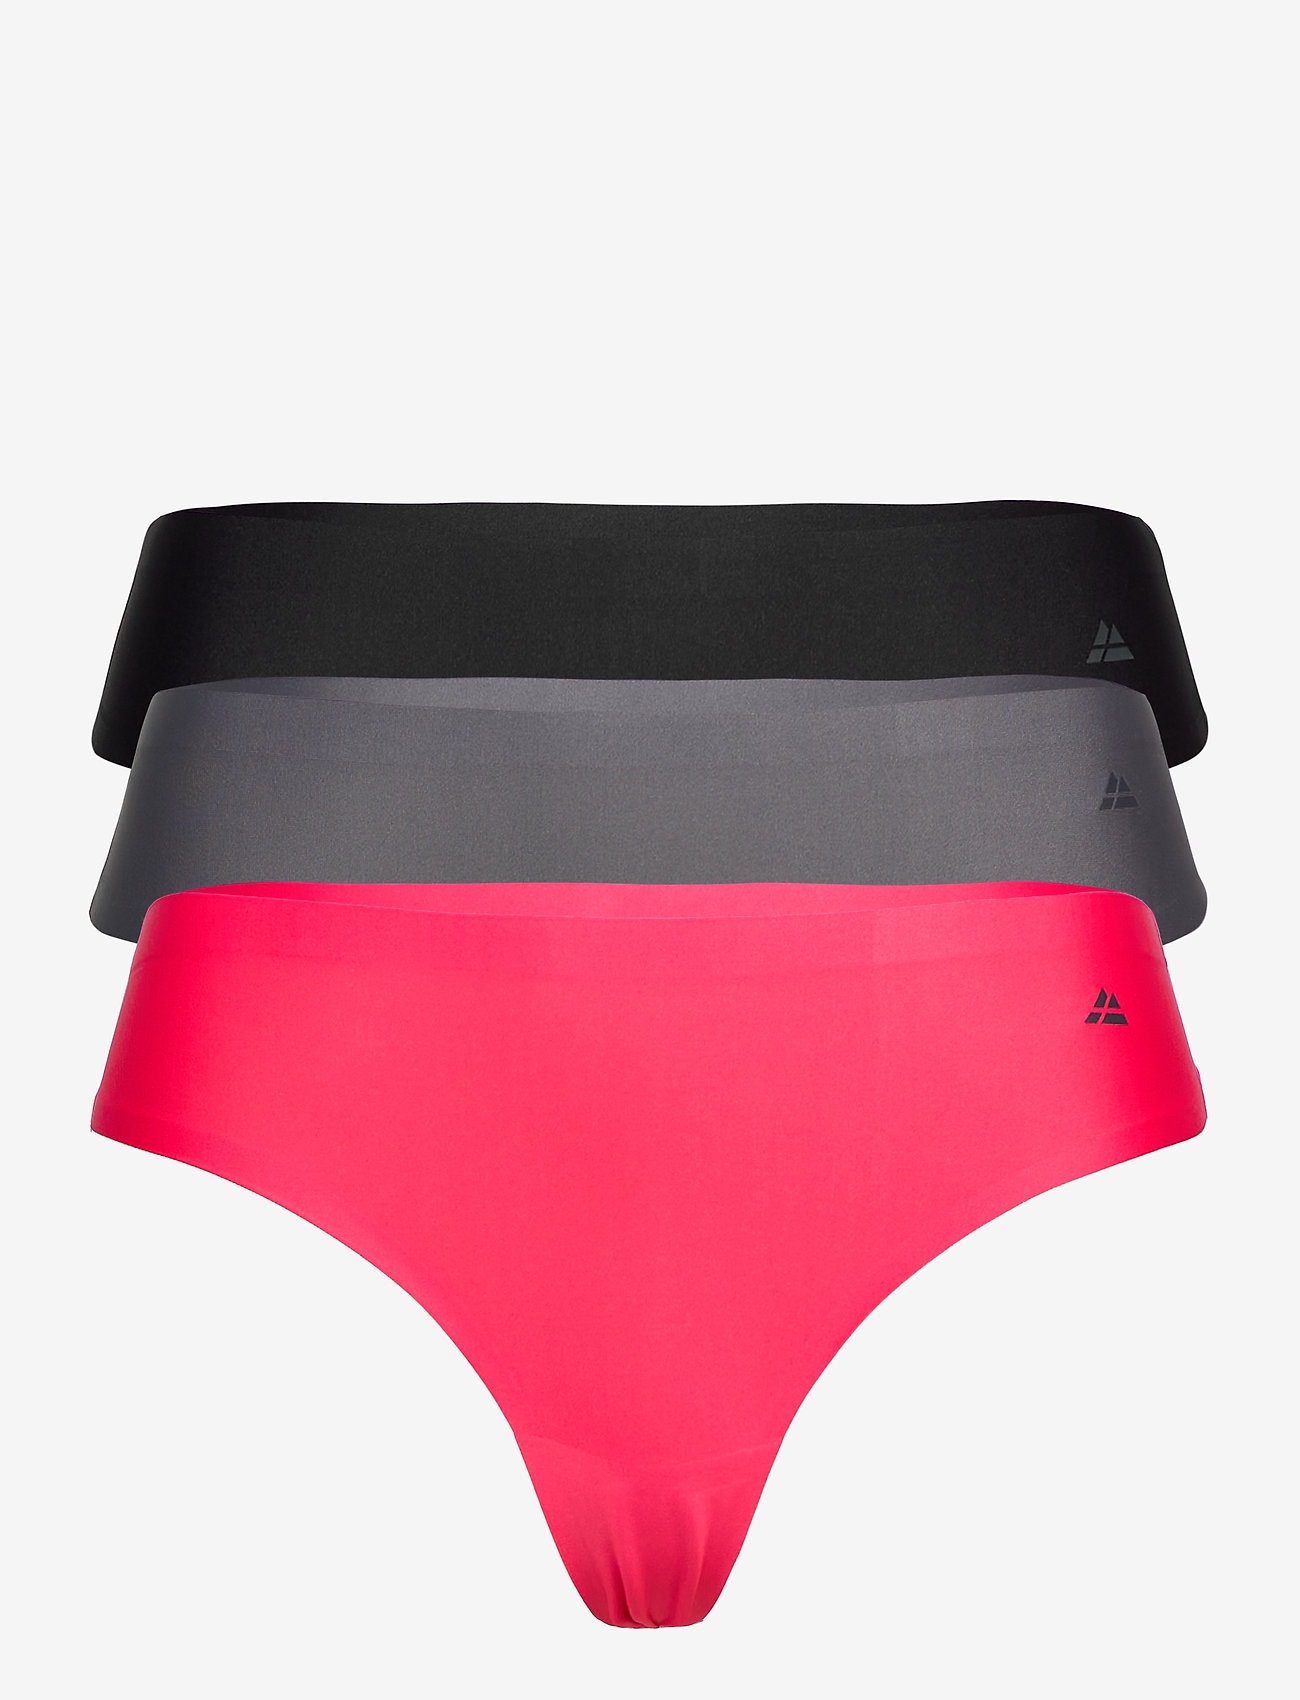 Danish Endurance - Women's Invisible Thong - nahtlose slips - multicolor (1 x black, 1 x grey, 1 x pink) - 0